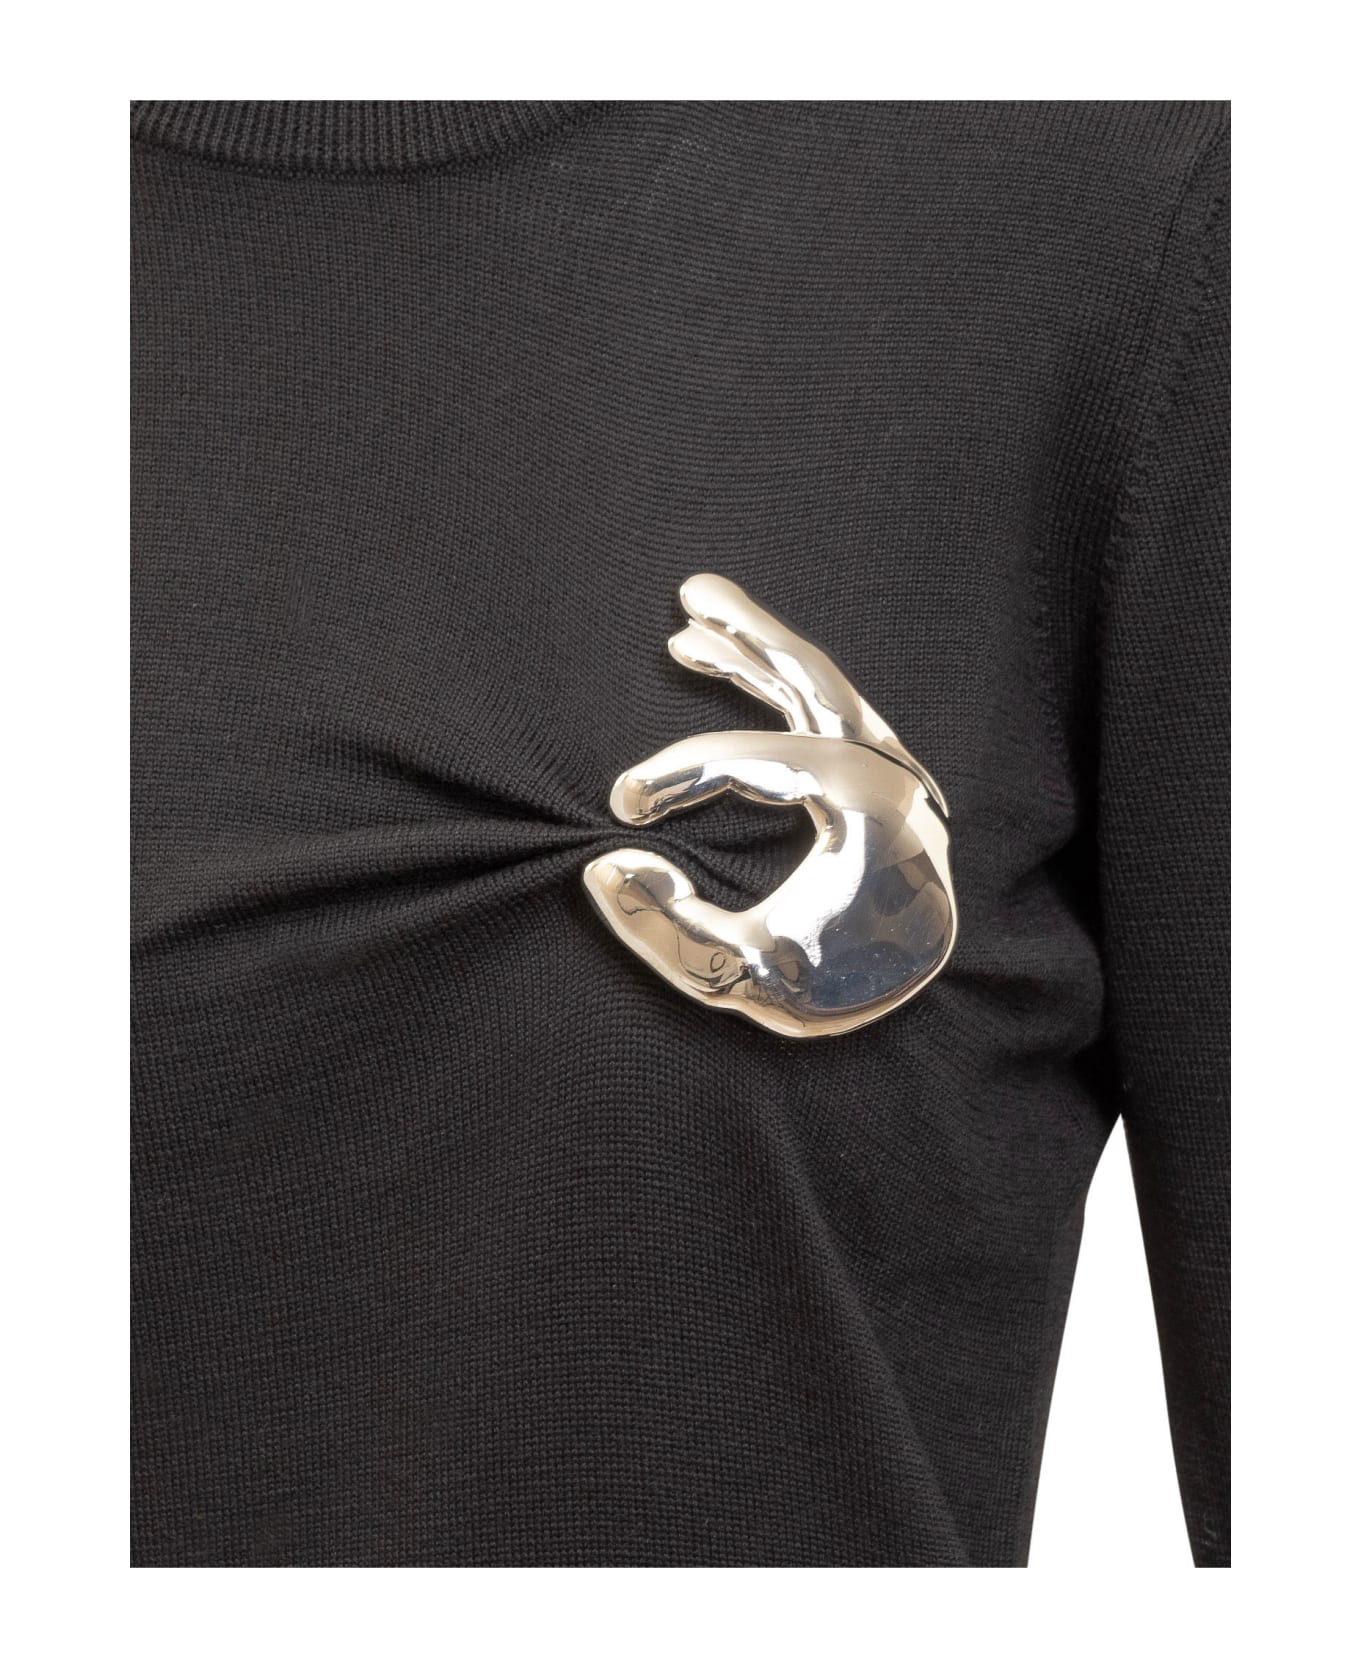 Coperni Sweater - BLACK